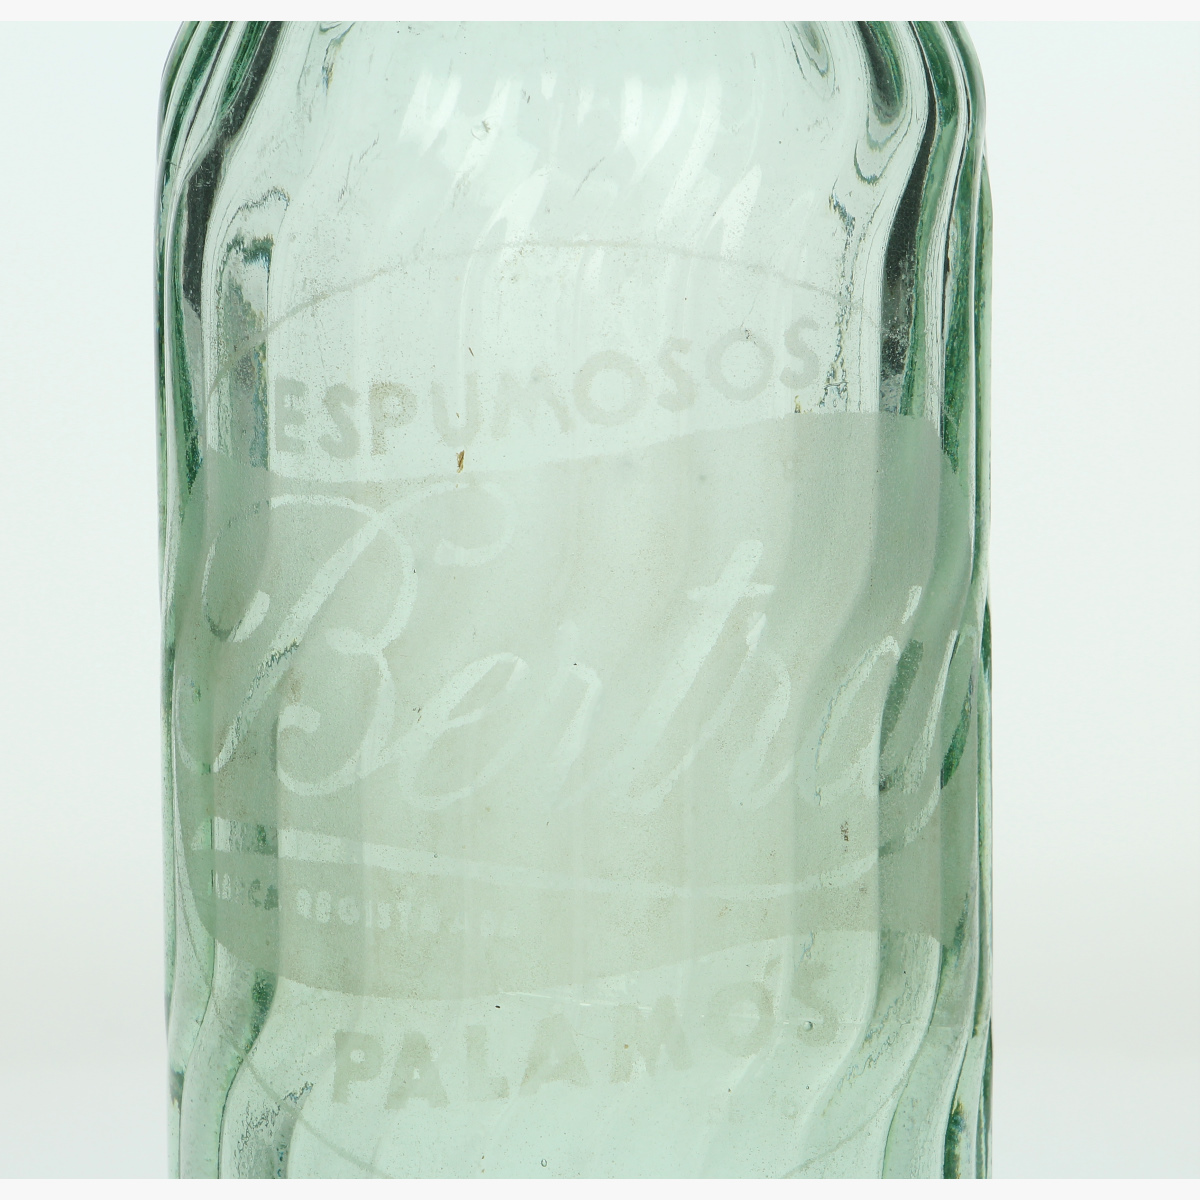 Afbeeldingen van oude soda fles espumosos bertrán palamos